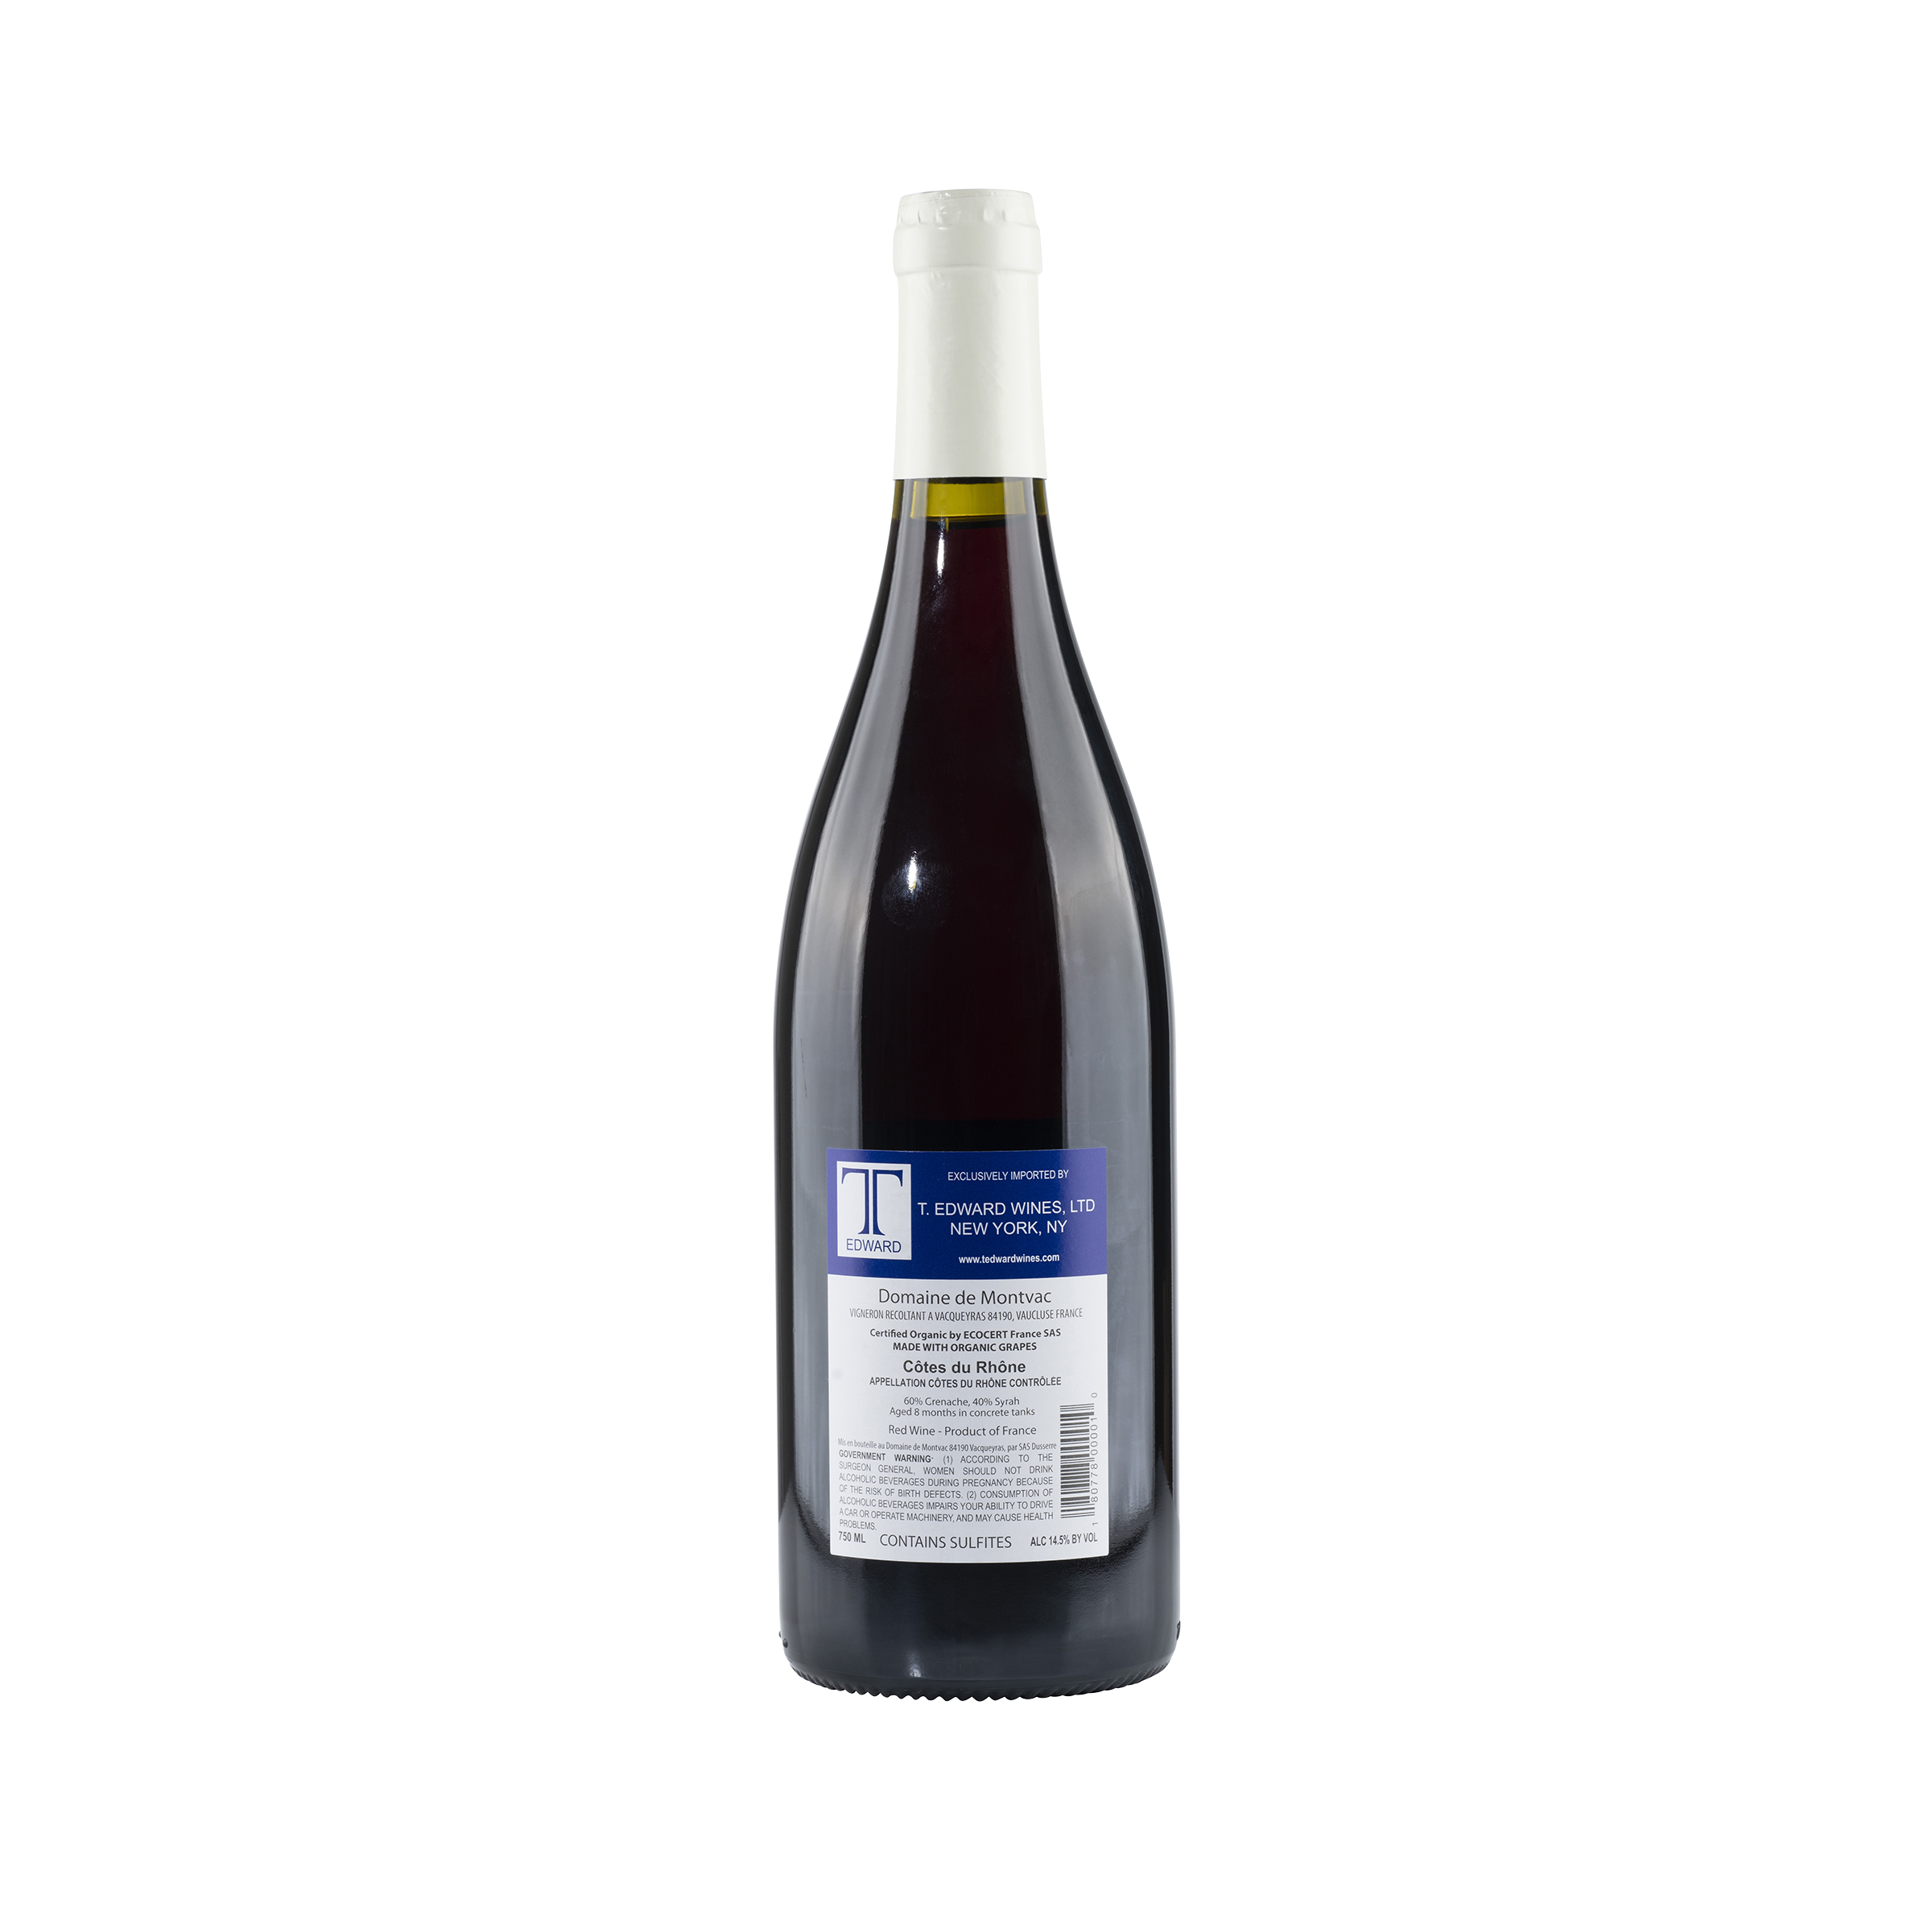 Côtes du Rhône  2022 Bottle Back